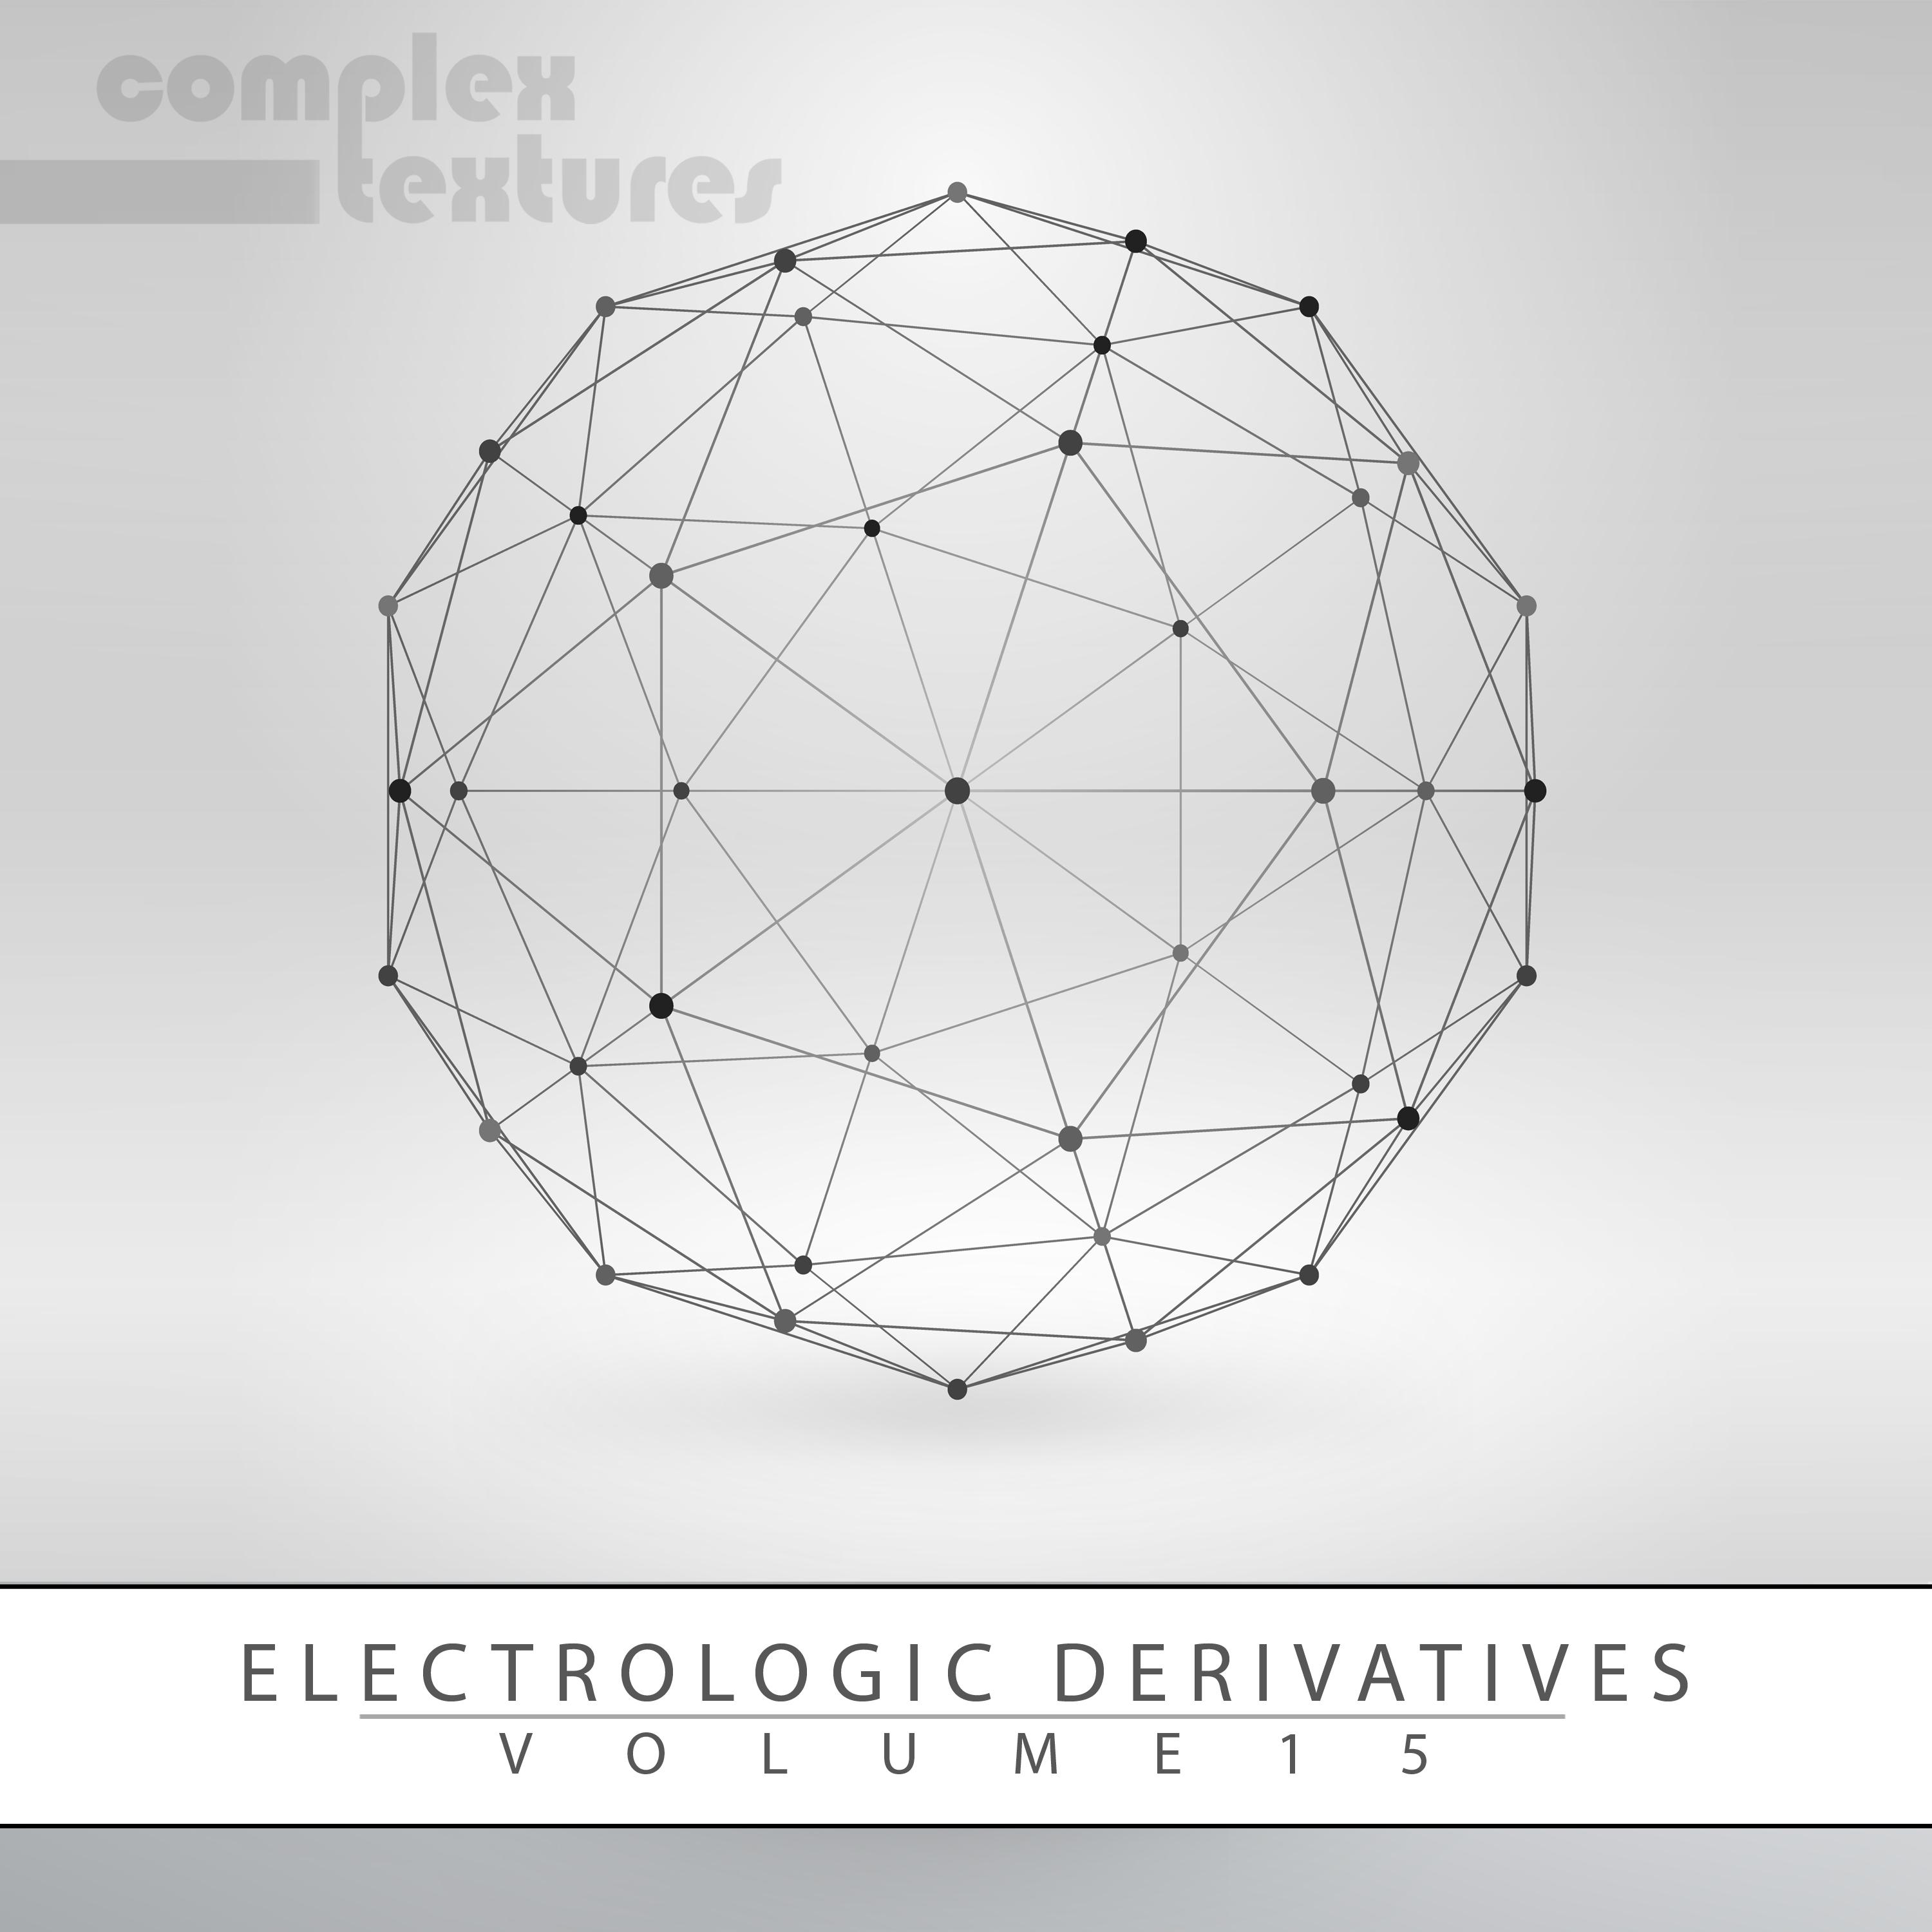 Electrologic Derivatives, Vol. 15